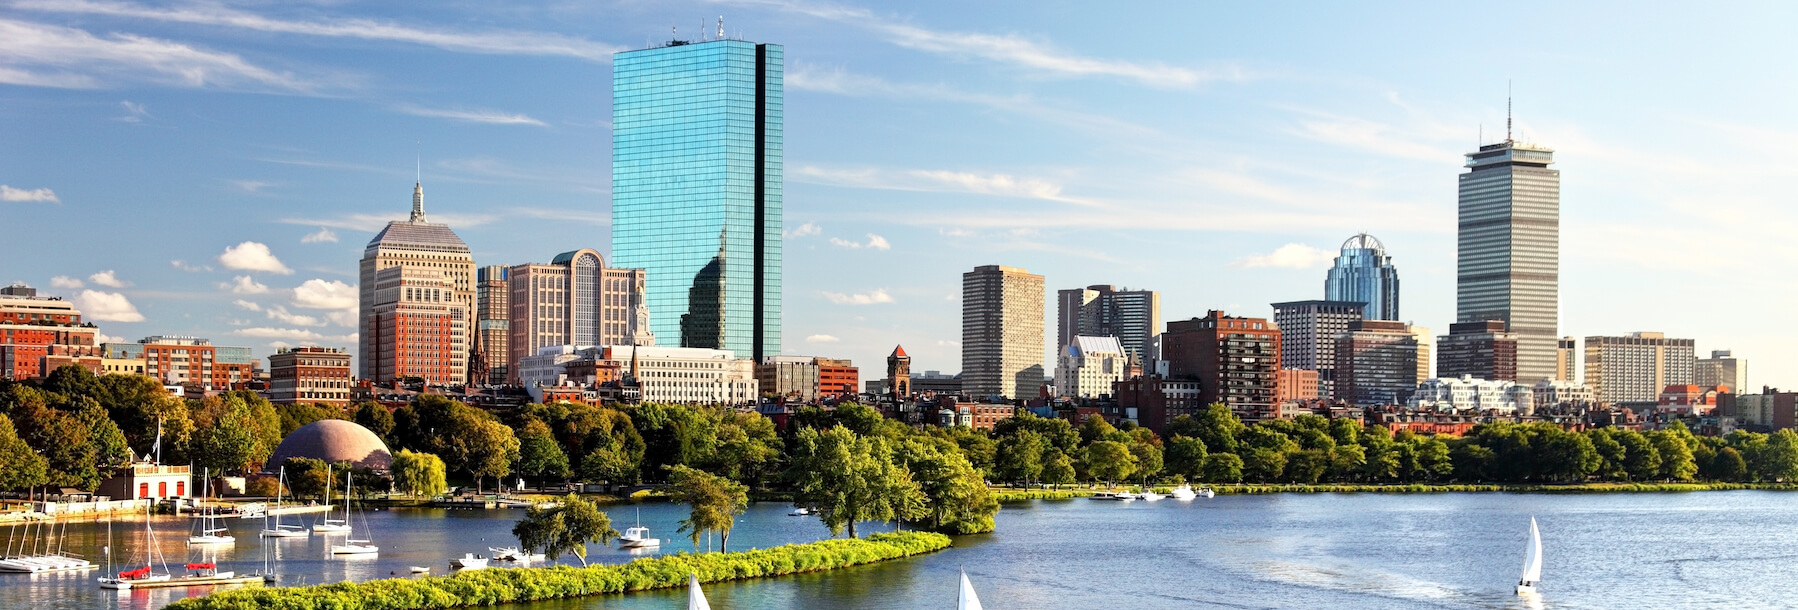 Skyline of the City of Boston 